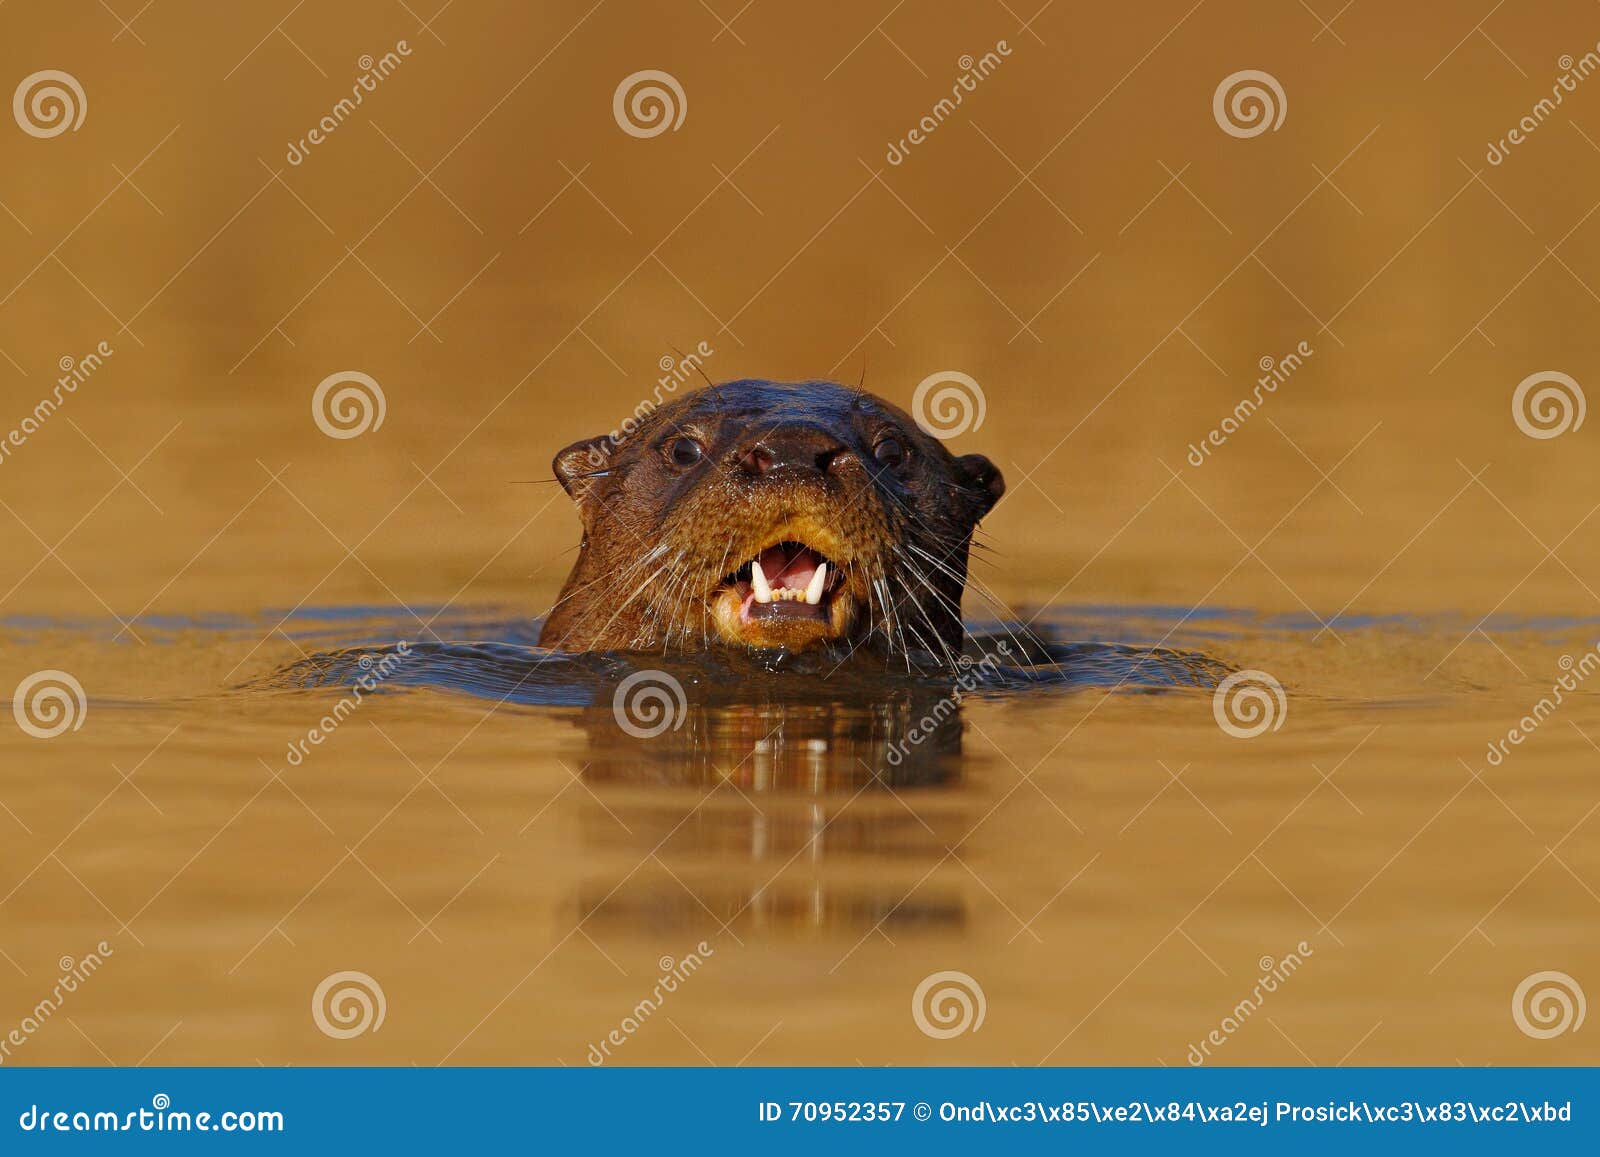 giant otter, pteronura brasiliensis, portrait in the river water level, rio negro, pantanal, brazil